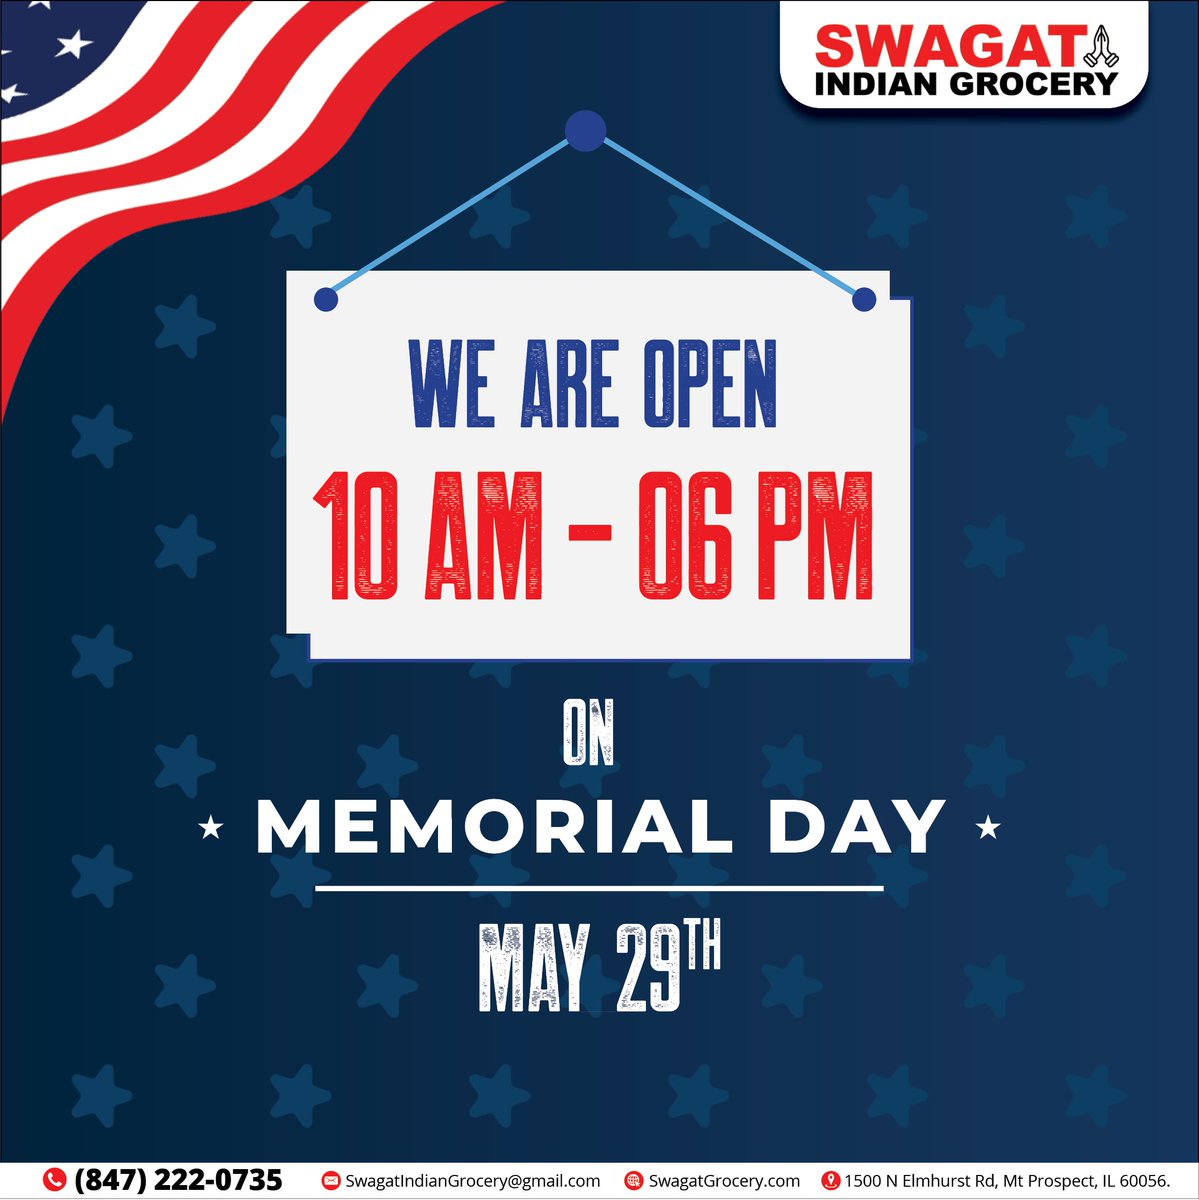 𝐓𝐡𝐢𝐬 𝐌𝐞𝐦𝐨𝐫𝐢𝐚𝐥 𝐃𝐚𝐲, 𝐰𝐞'𝐫𝐞 𝐡𝐞𝐫𝐞 𝐭𝐨 𝐬𝐞𝐫𝐯𝐞 𝐲𝐨𝐮 𝐰𝐢𝐭𝐡 𝐬𝐩𝐞𝐜𝐢𝐚𝐥 𝐬𝐭𝐨𝐫𝐞 𝐡𝐨𝐮𝐫𝐬 𝐟𝐫𝐨𝐦 𝟏𝟎 𝐀𝐌 𝐭𝐨 𝟔 𝐏𝐌.

Shop Now👉: swagatgrocery.com

#MemorialDay #happymemorialday #RememberAndHonor #StoreHours #SwagatIndianGrocery